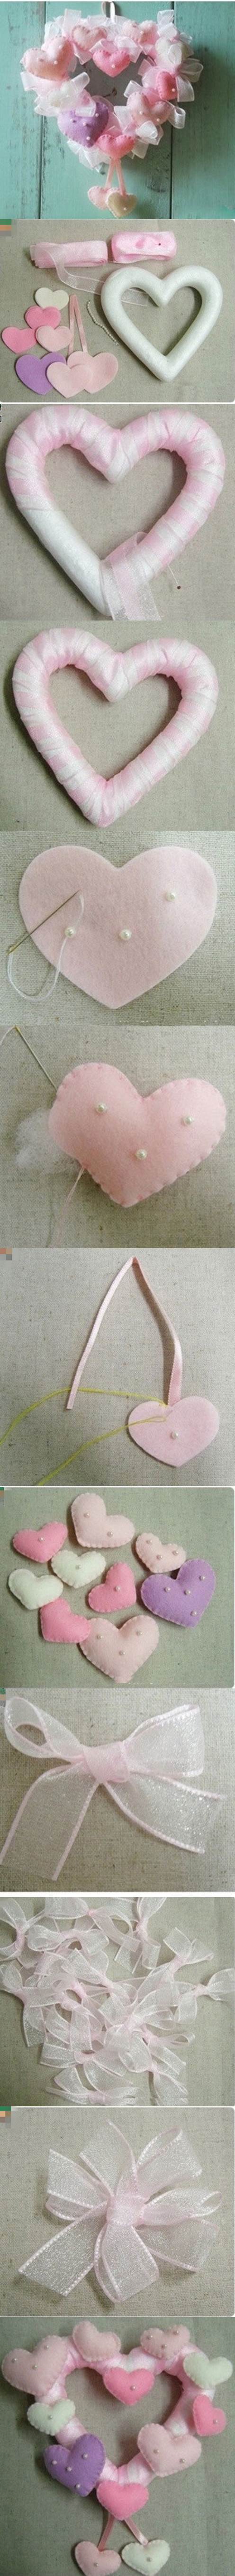 DIY Valentines Day Heart Shape Wreath 2